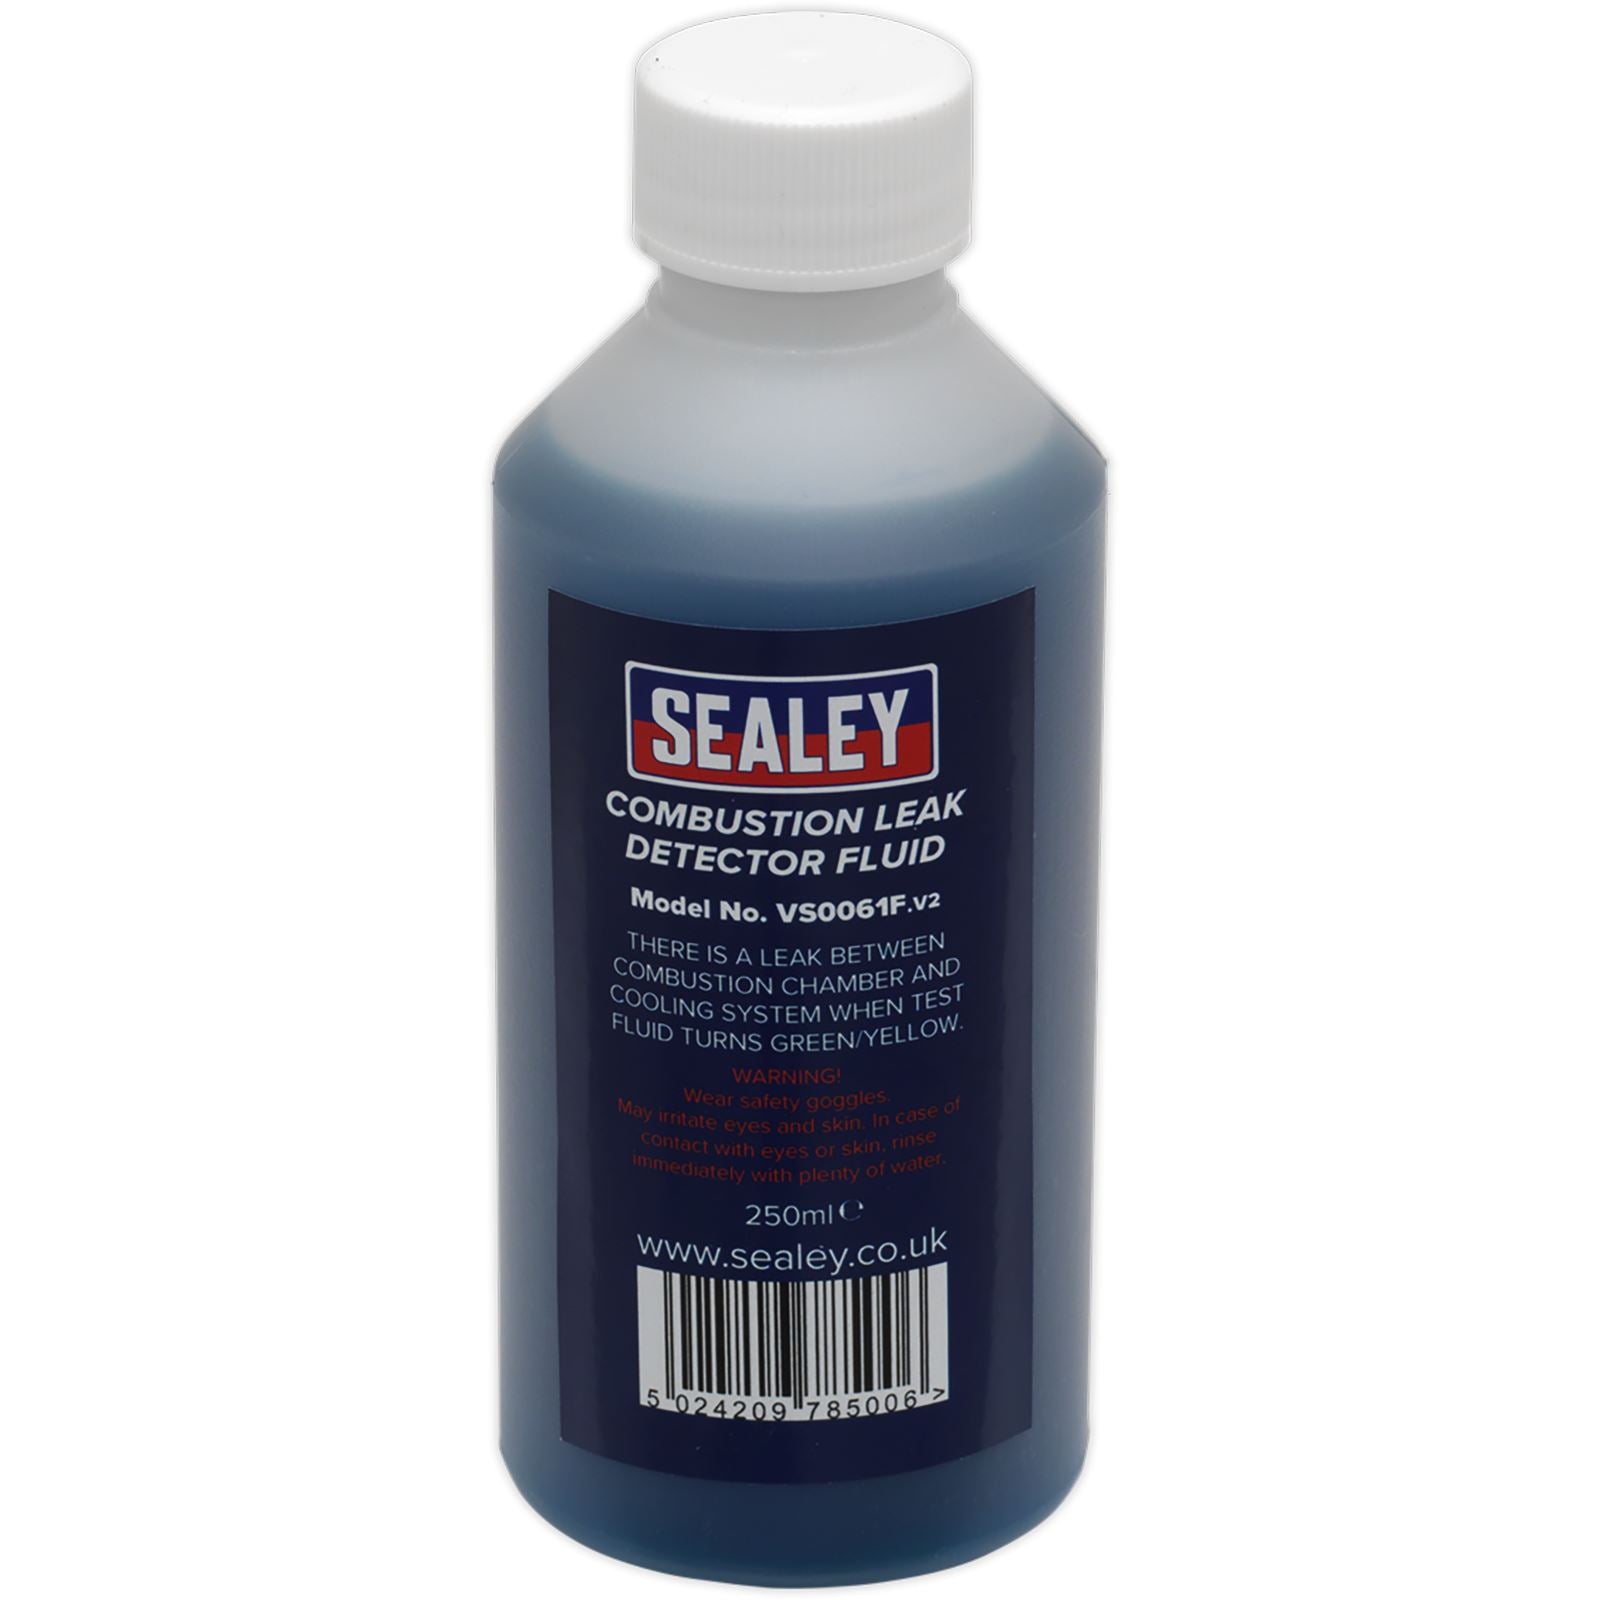 Sealey Combustion Leak Detection Fluid